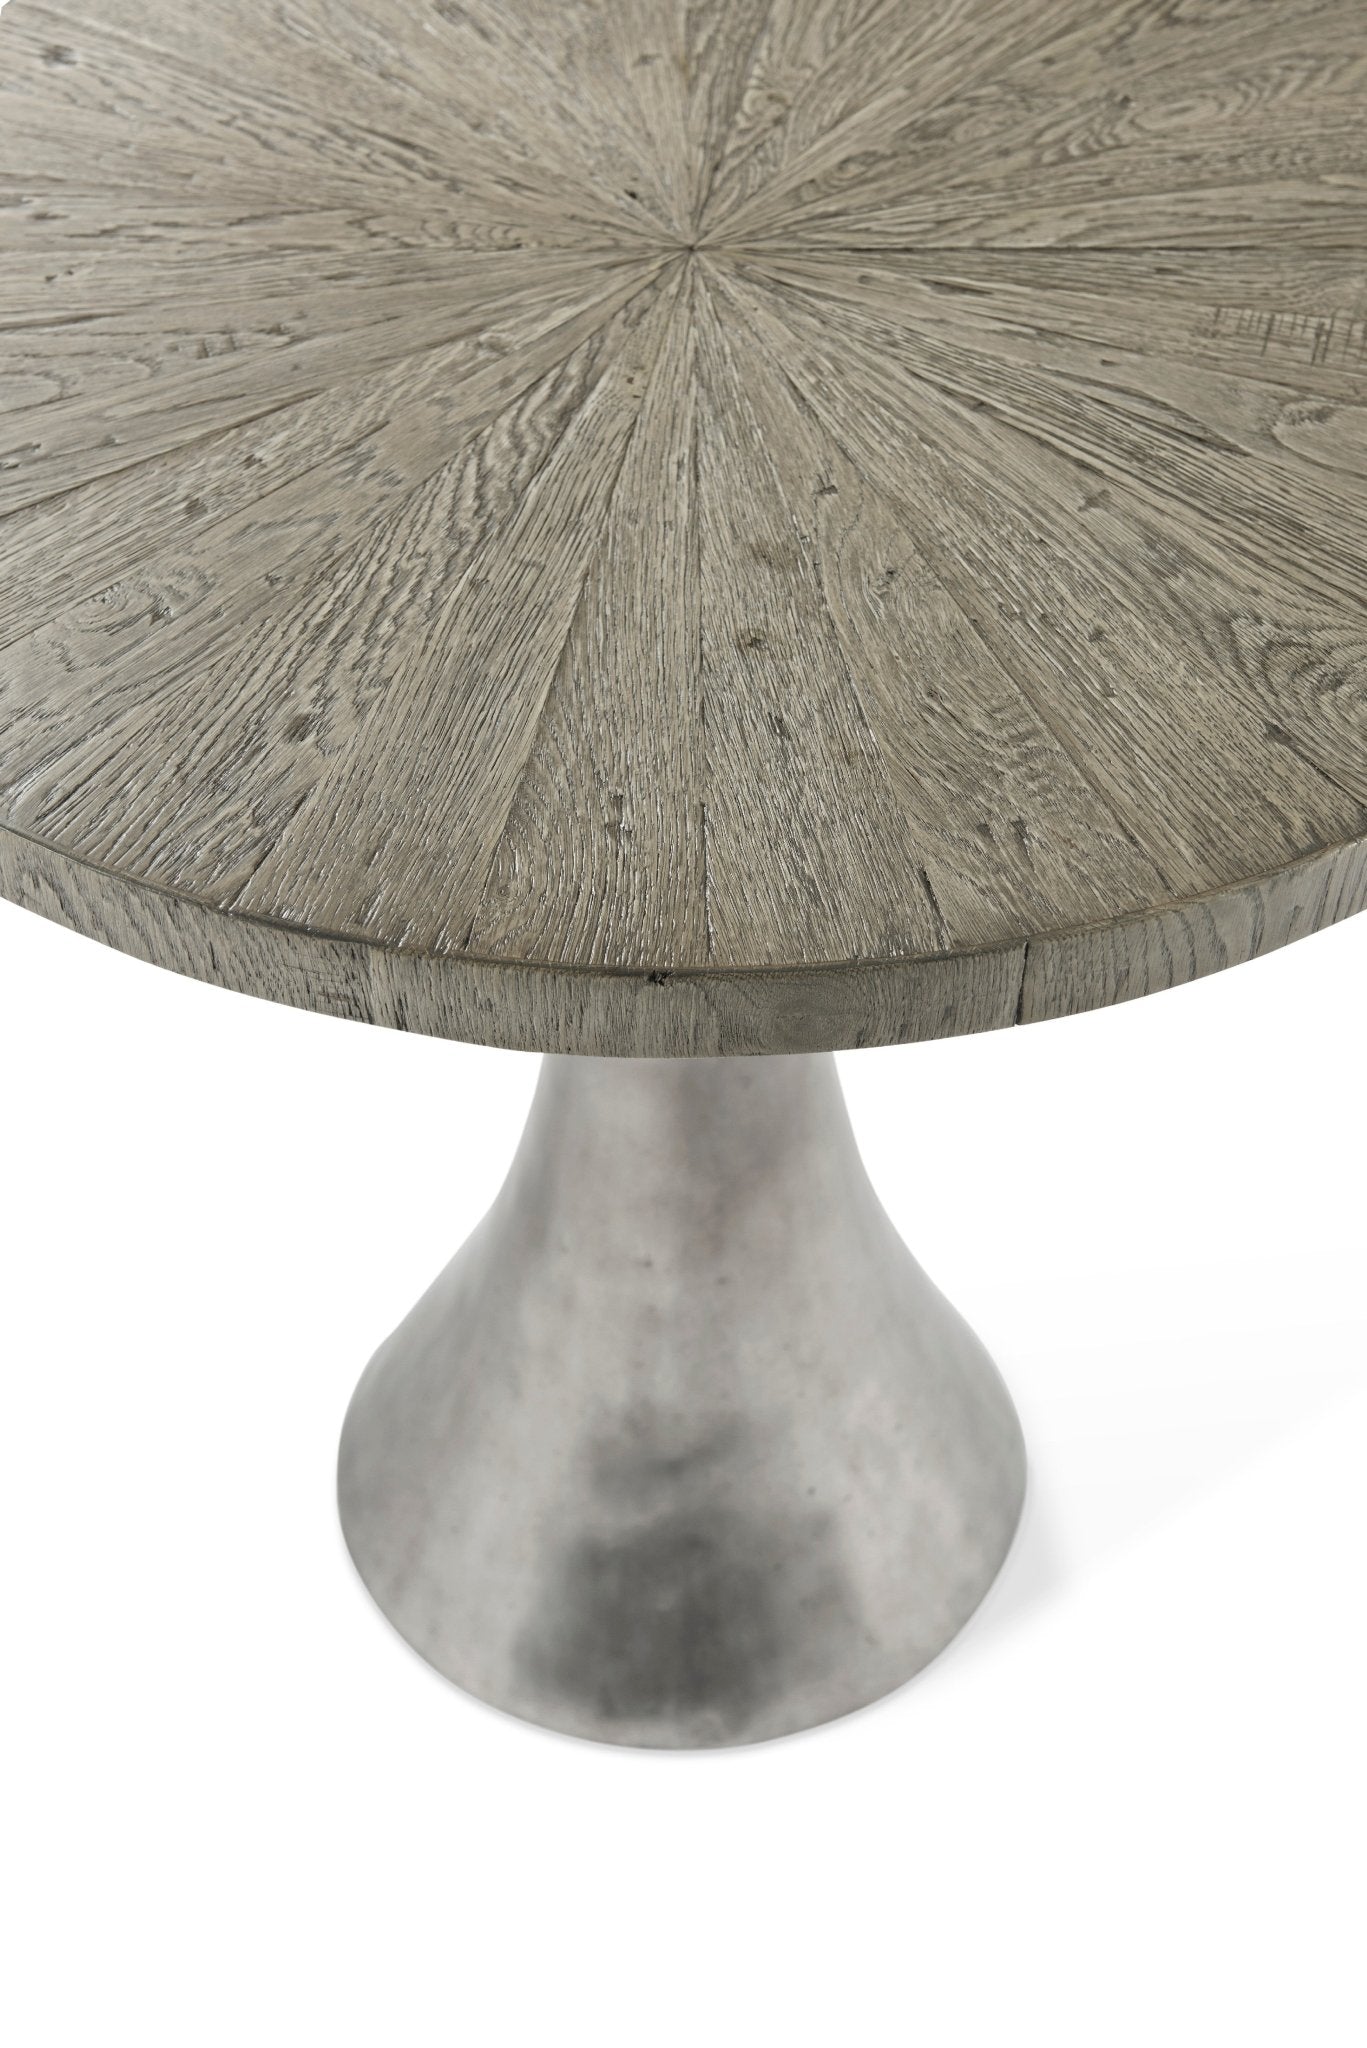 Arden Drinks Table - Grey Echo Oak - - Furniture - Tipplergoods